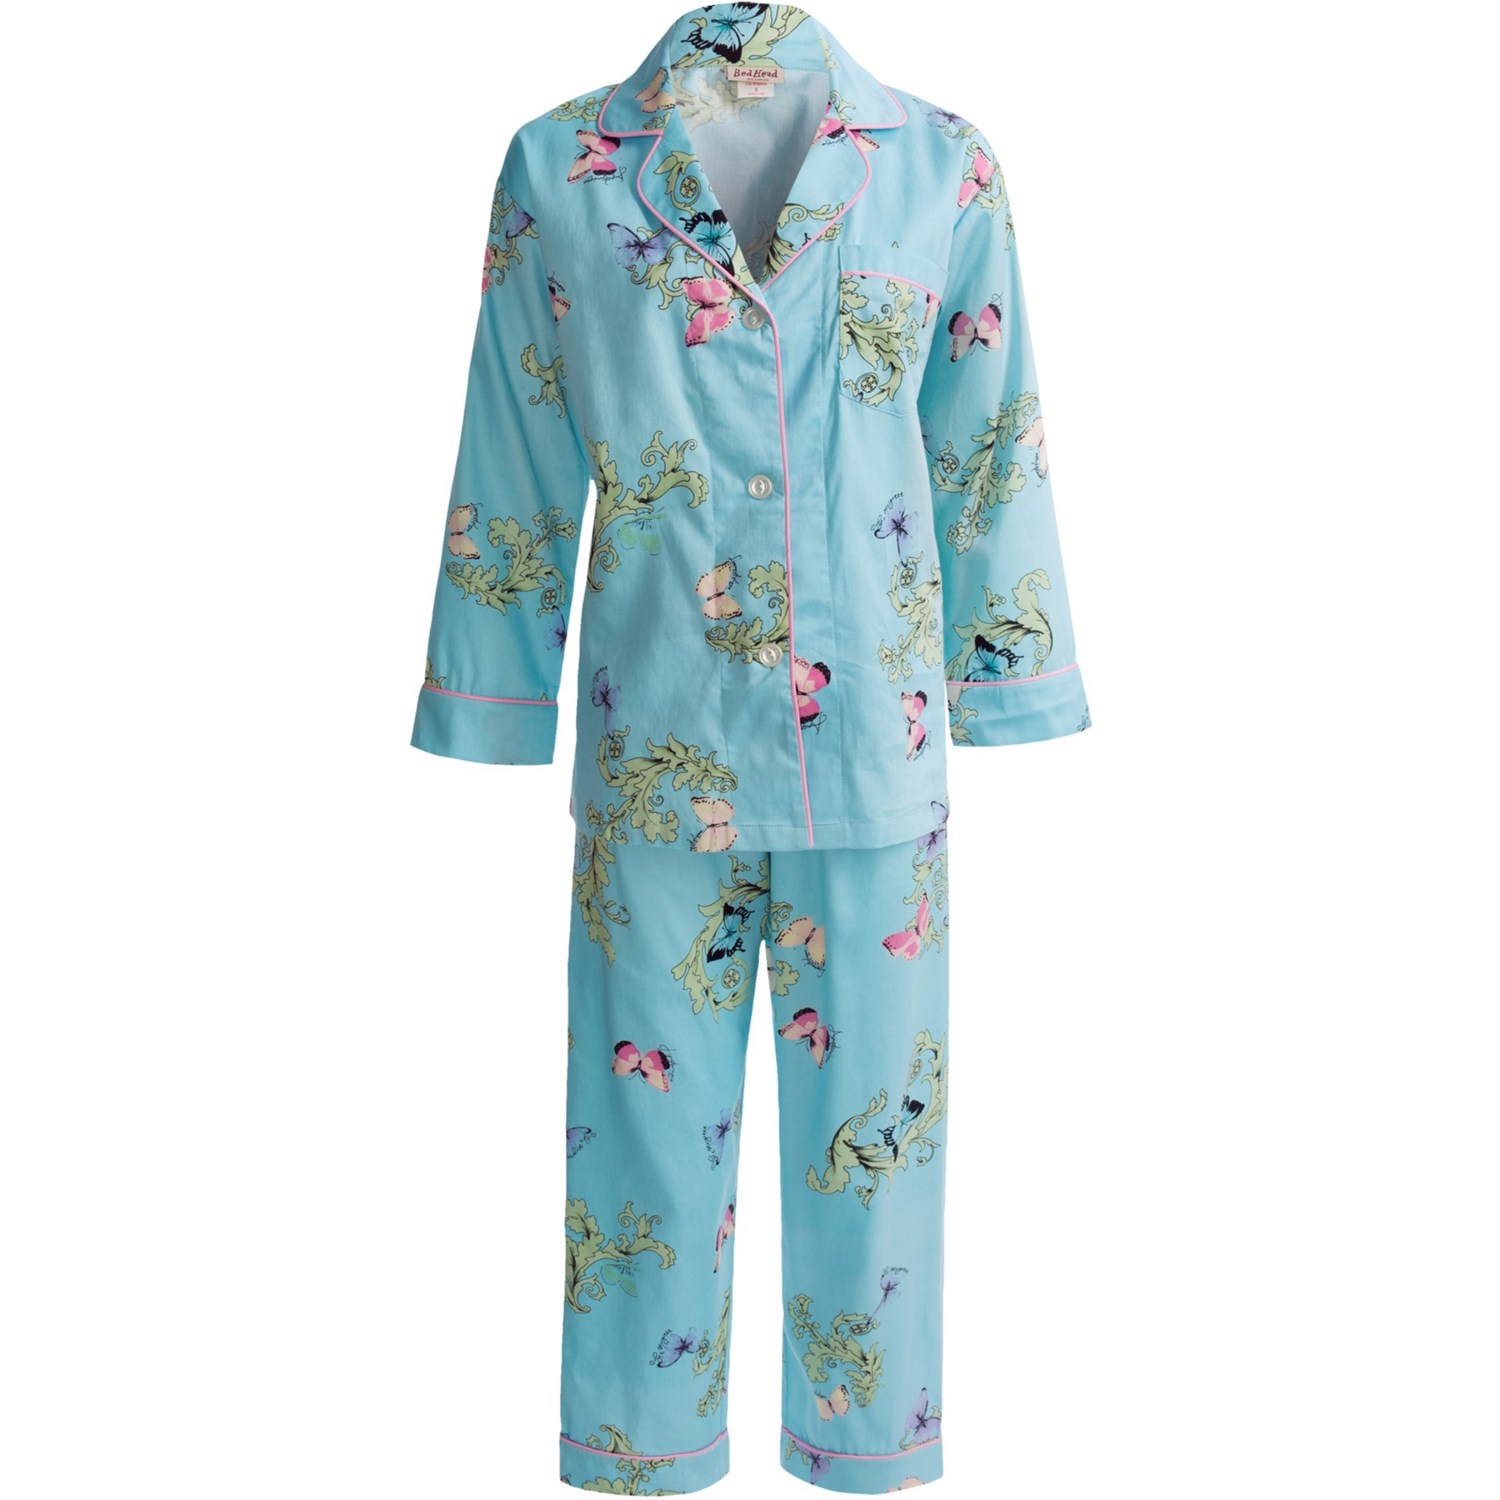 Bedhead Printed Cotton Sateen Pajamas (For Women) 38